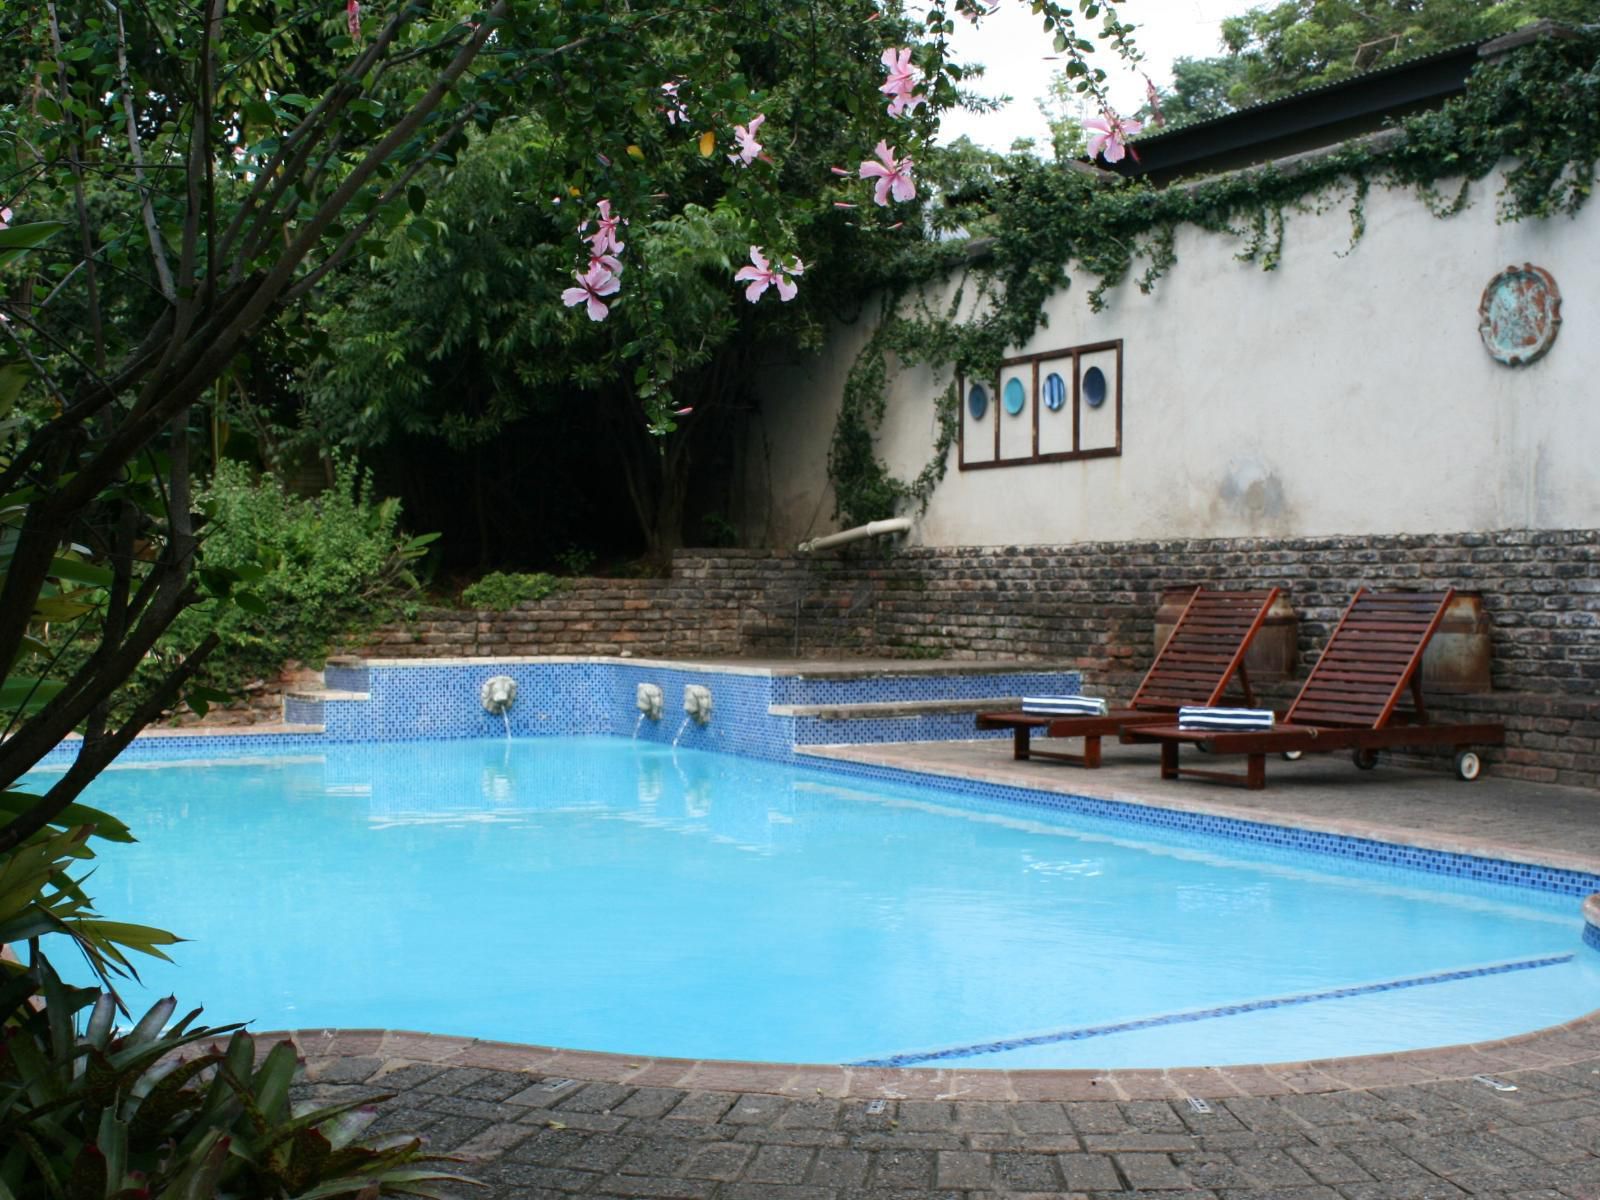 Klipkoppie Cottage Nelspruit Mpumalanga South Africa House, Building, Architecture, Garden, Nature, Plant, Swimming Pool